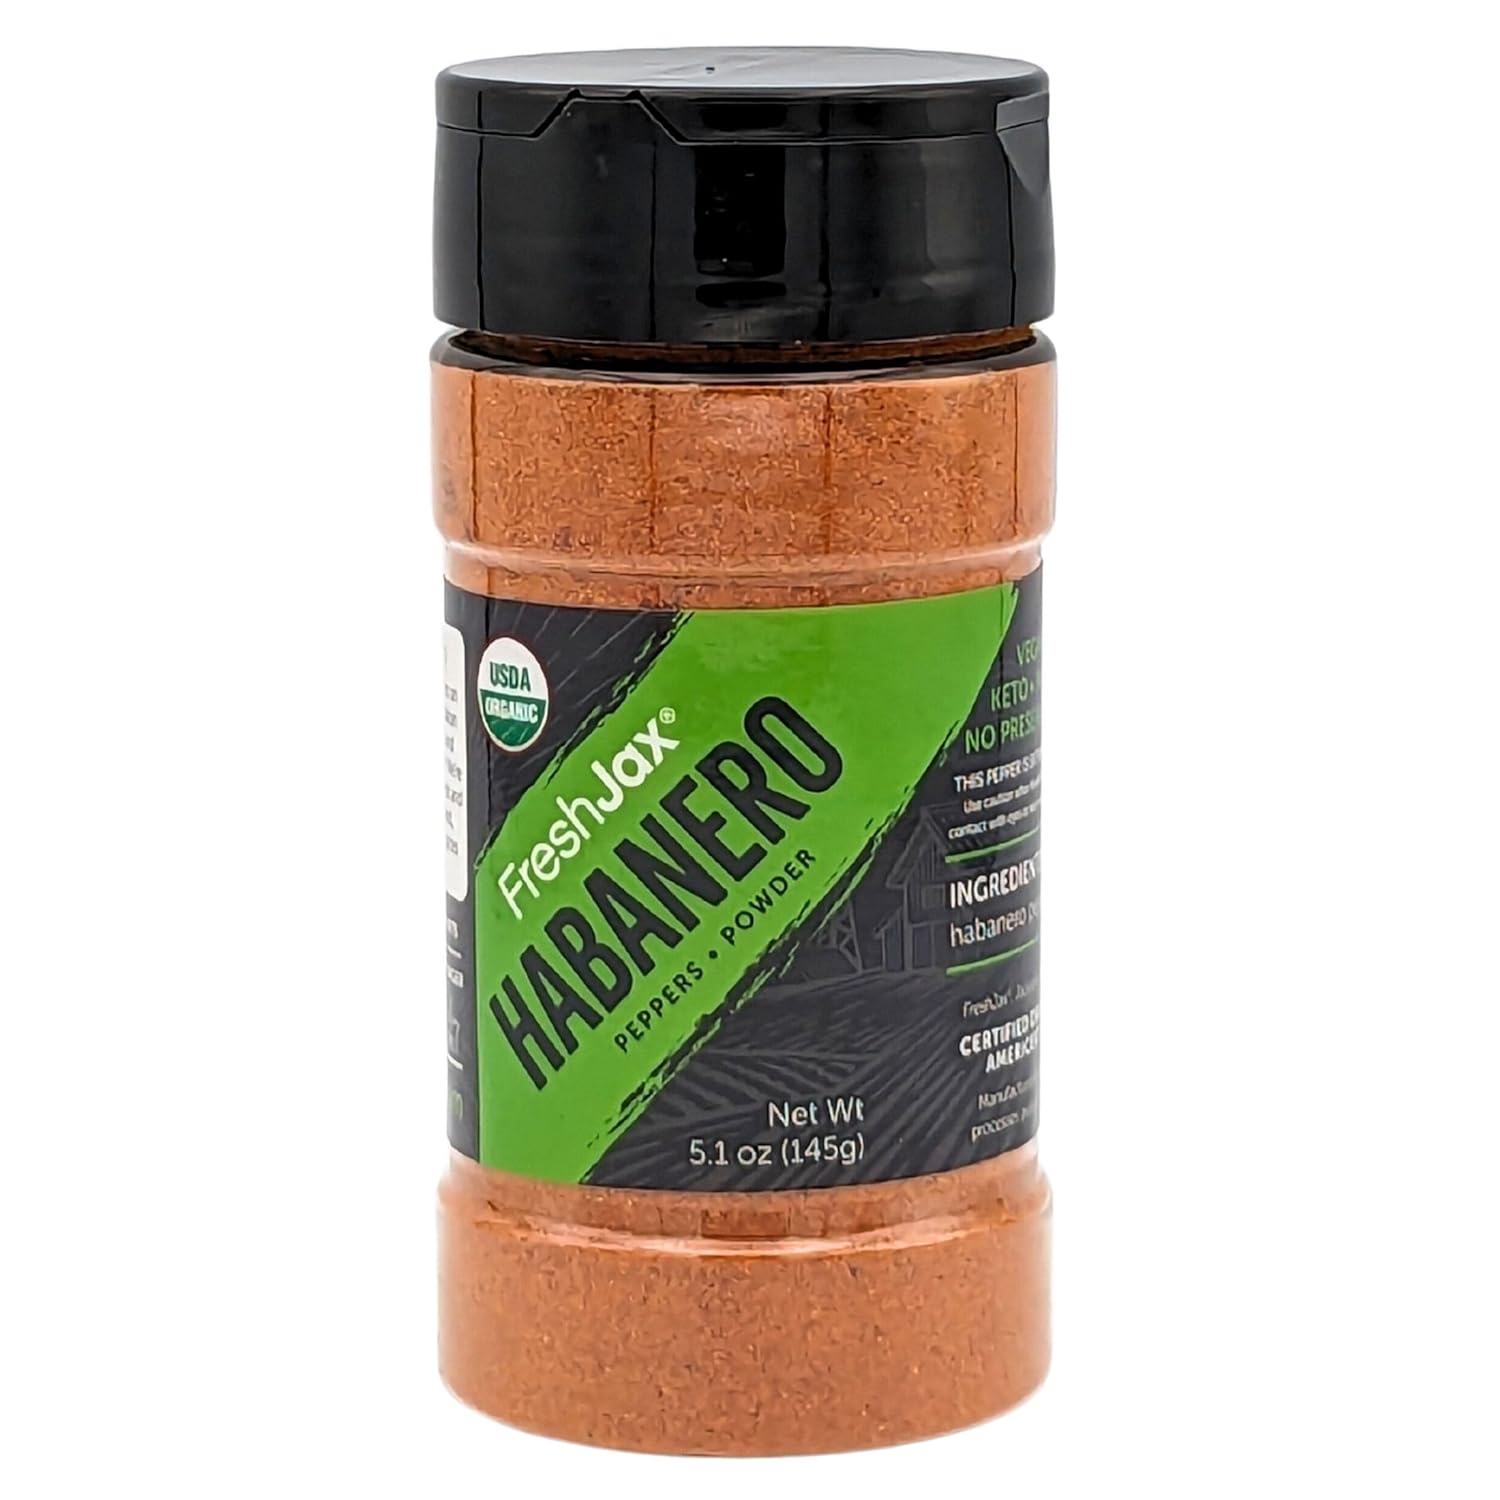 FreshJax Organic Habanero Pepper Powder (5.1 oz Bottle) Non GMO, Gluten Free, Keto, Paleo, No Preservatives Habanero Seasoning | Handcrafted in Jacksonville, Florida